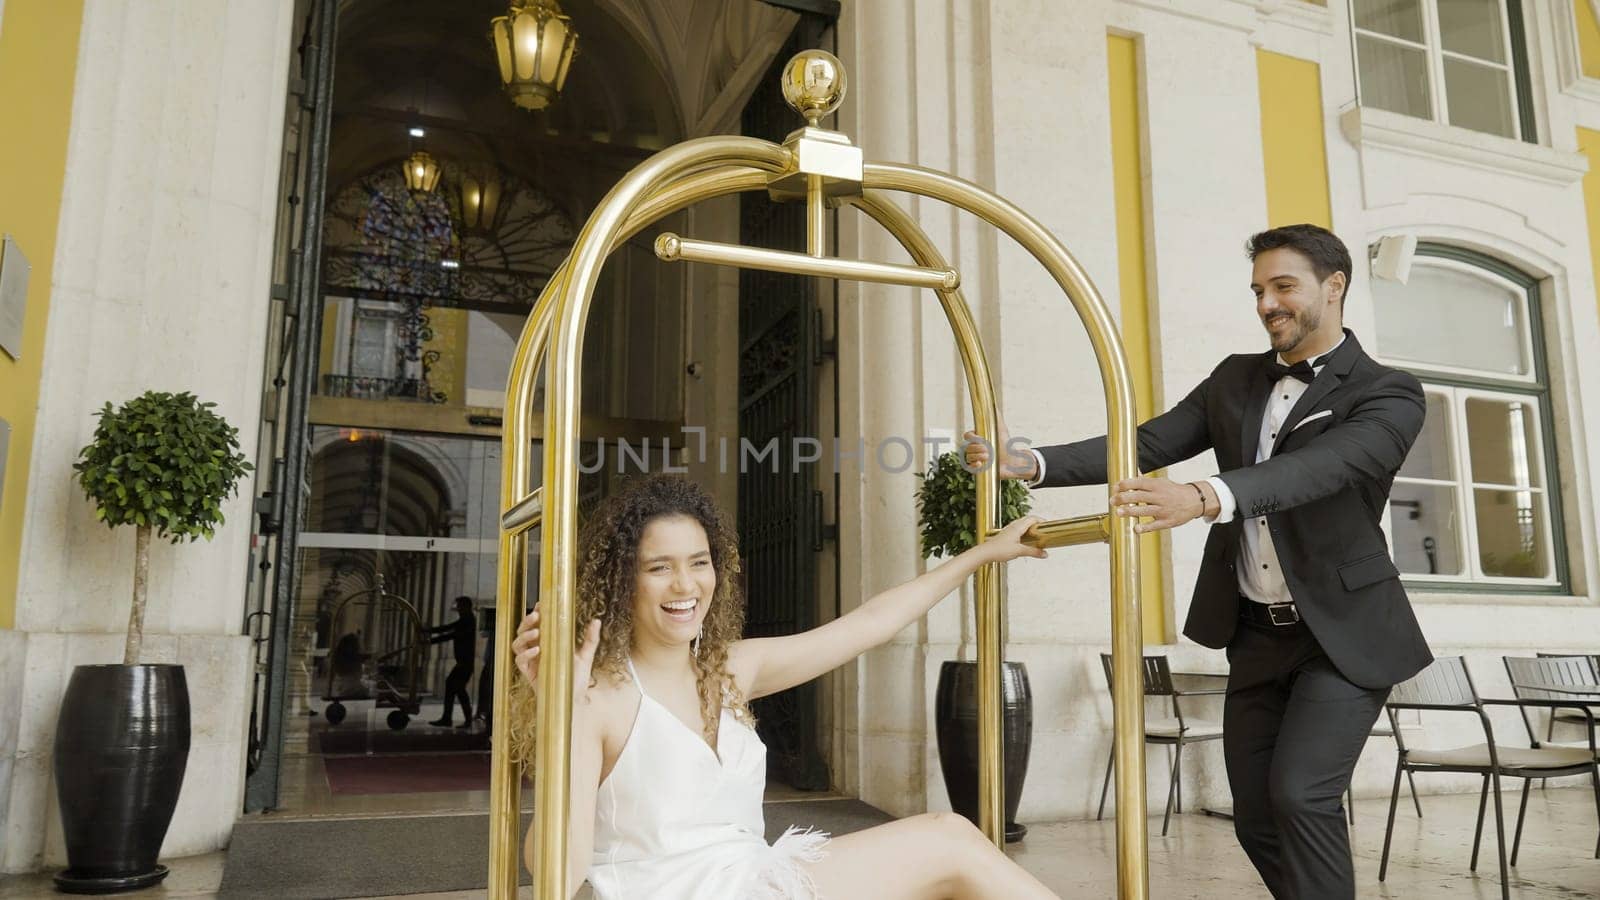 Groom riding bride in luggage trolley near luxury hotel. Action. Newlyweds having fun